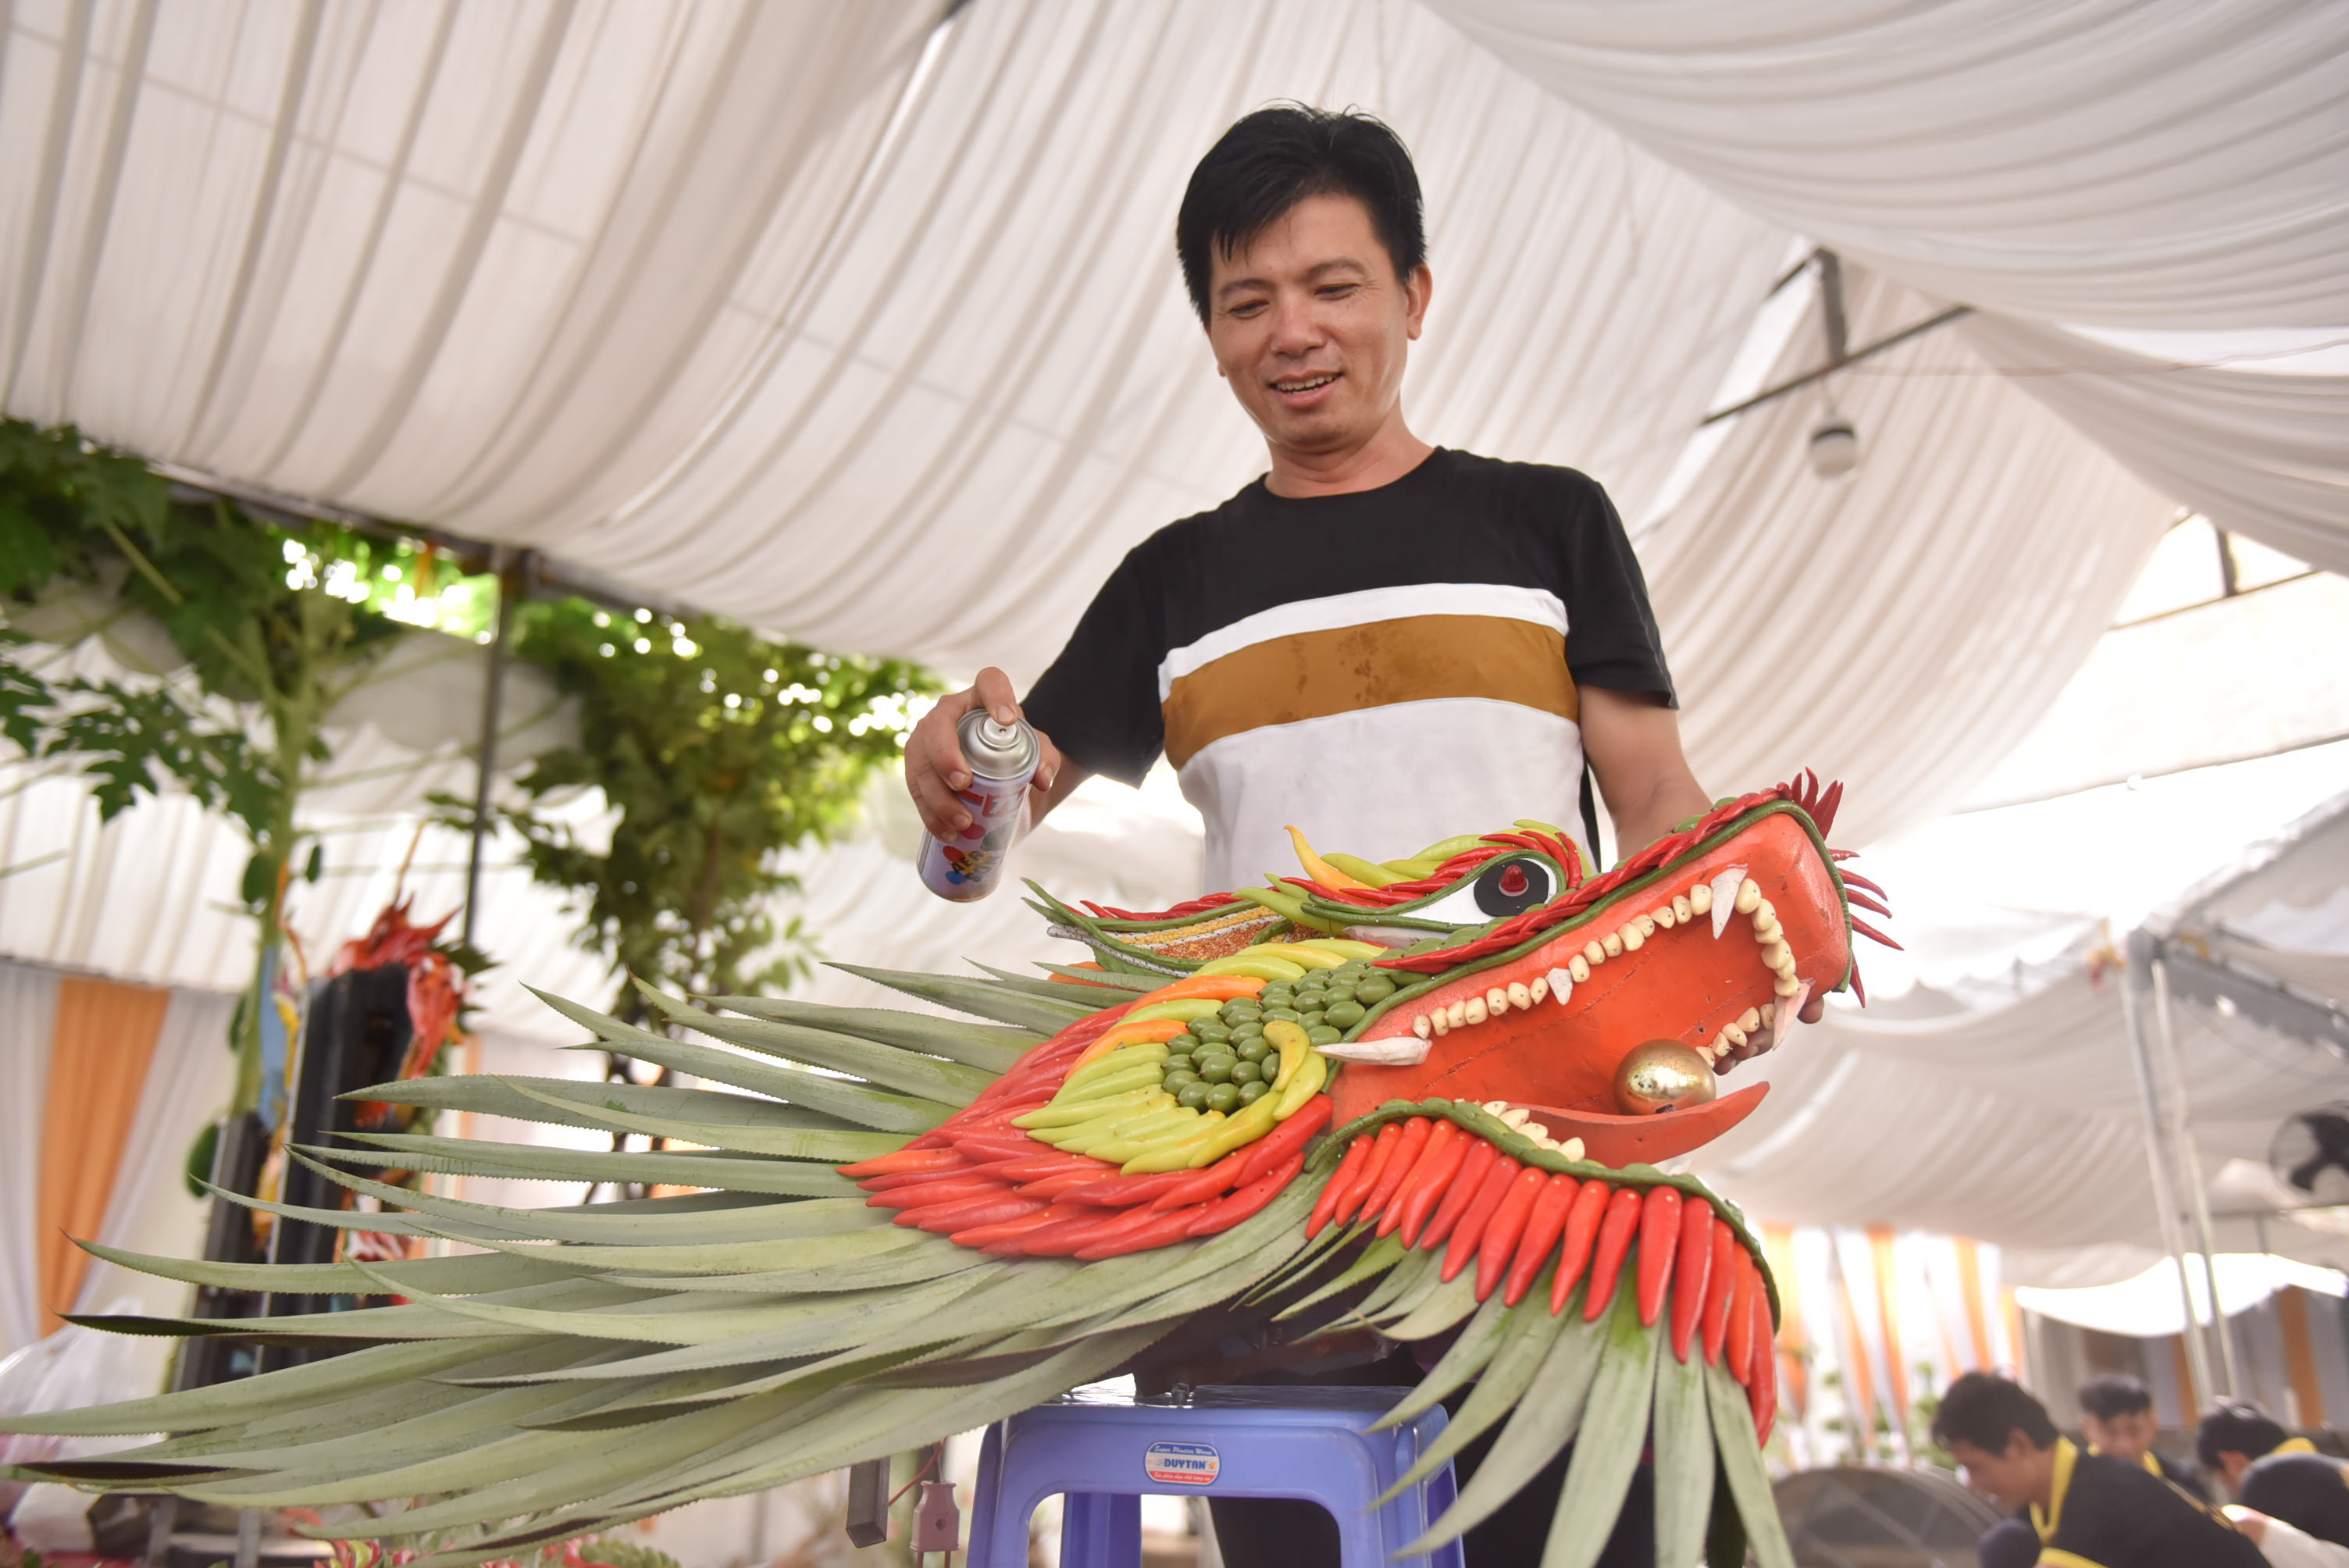 Tran Trung Hieu glazes the dragon head to make it shiny. Photo: Ngoc Phuong / Tuoi Tre News